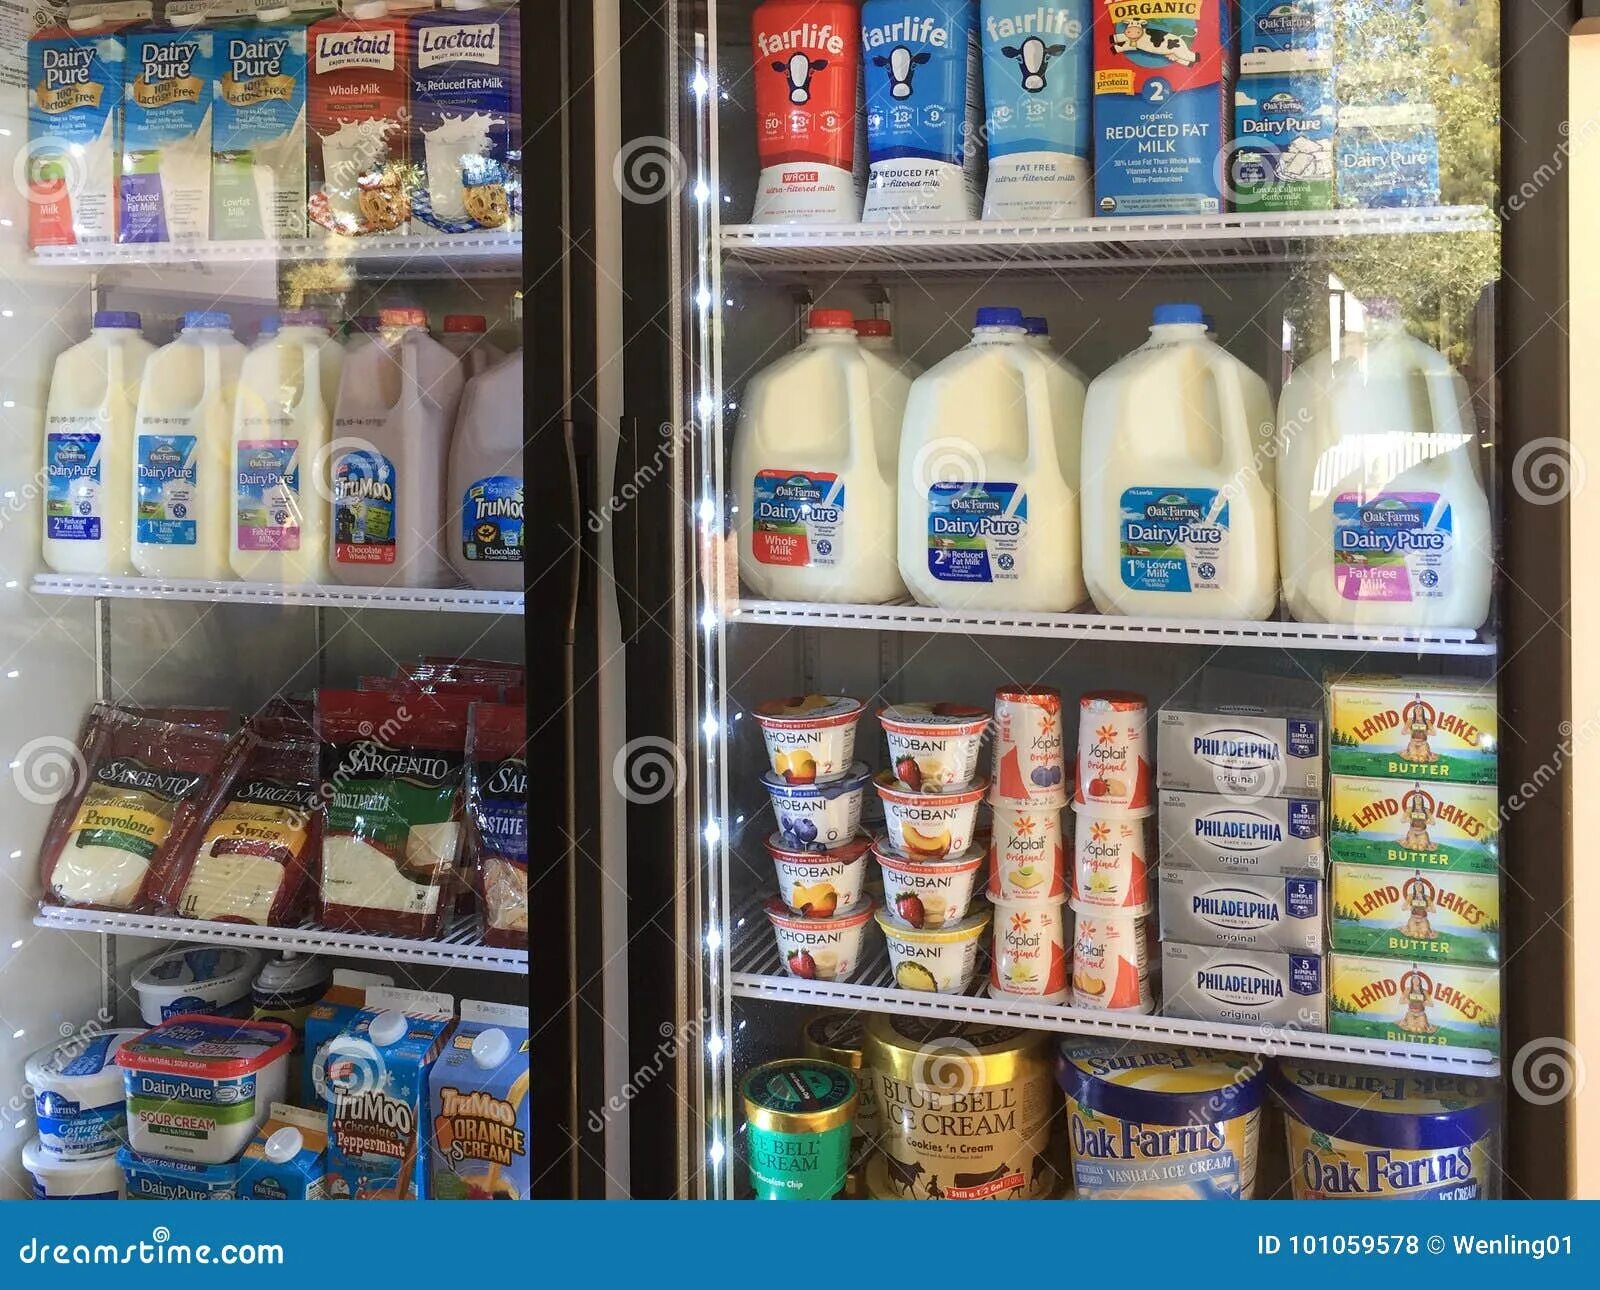 They sell milk in this. Холодильник с молочной продукцией. Холодильник с молочными продуктами. Молочные продукты в холодильнике. Молочный холодильник товар.